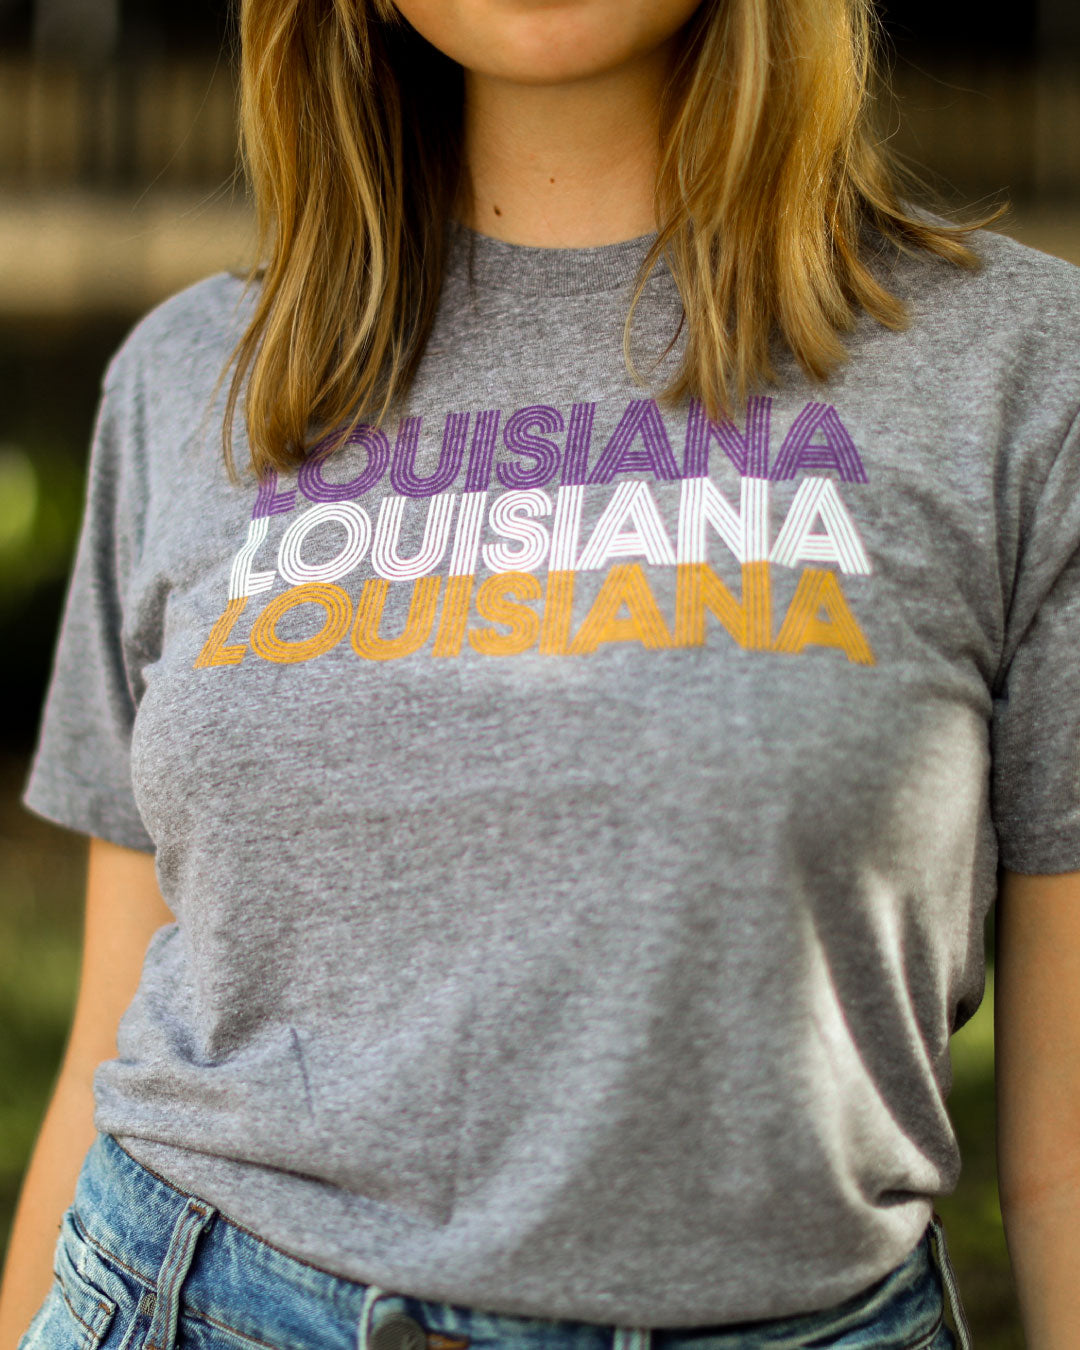 TheShirtRepublic Louisiana Saturday Night, Louisiana Gift, Love Louisiana, Purple and Gold, Louisiana State, Baton Rouge, Louisiana Cajun, Tigers Shirt